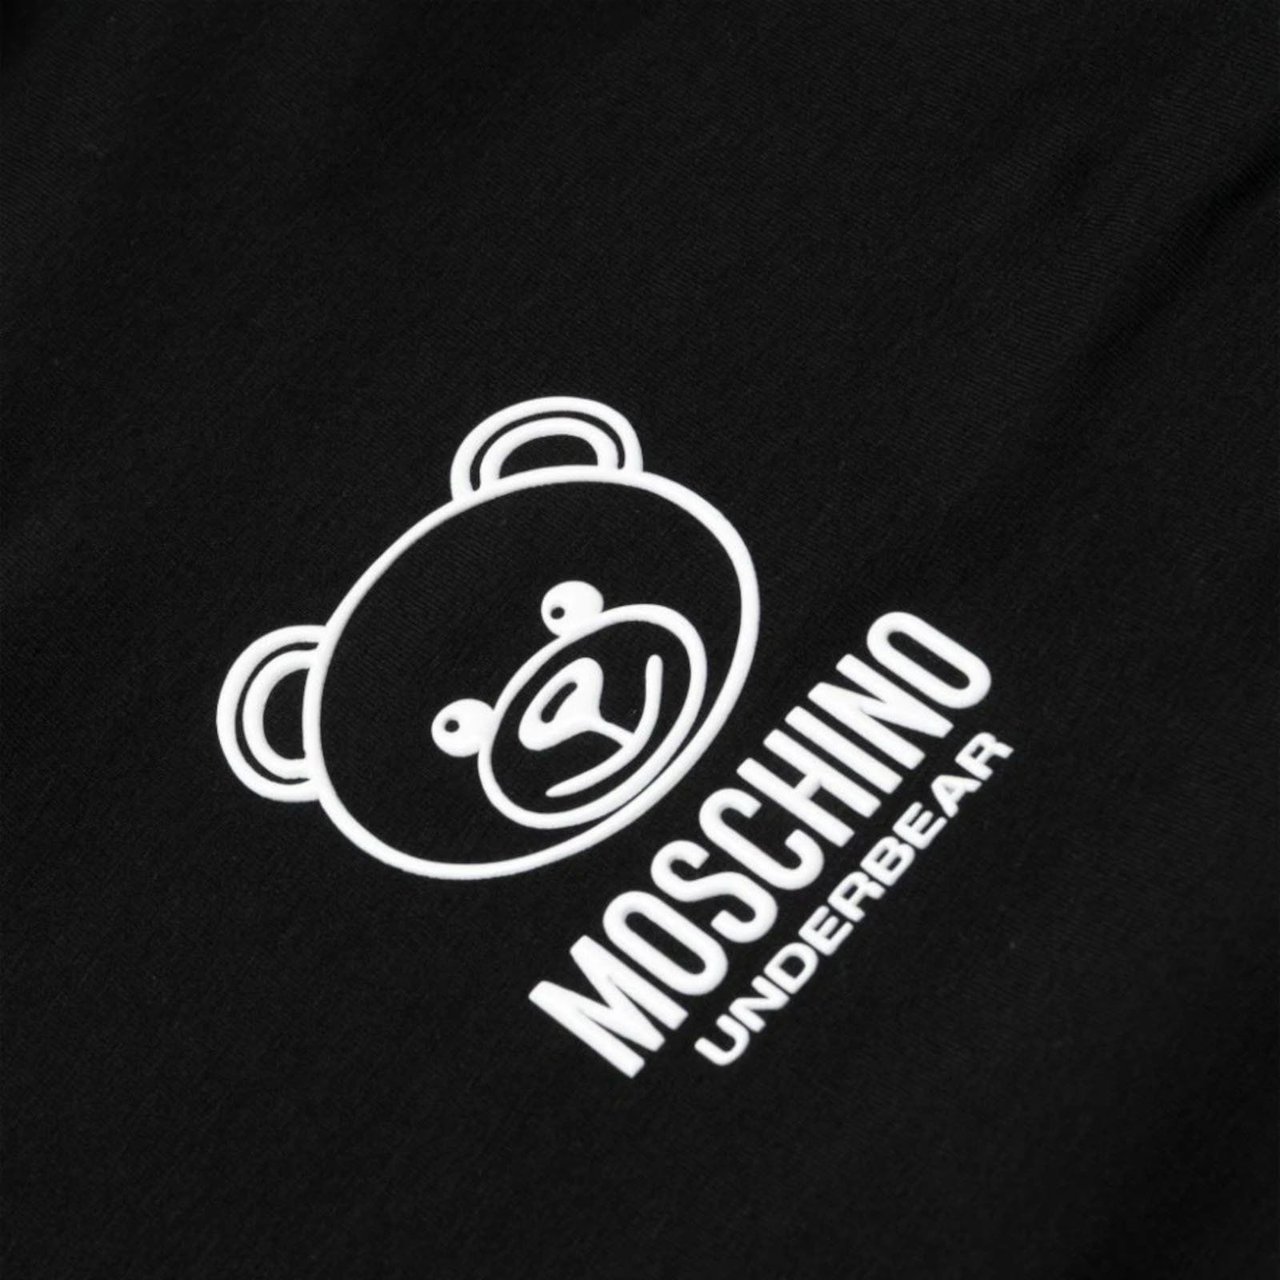 Moschino T-shirt Zwart Zwart